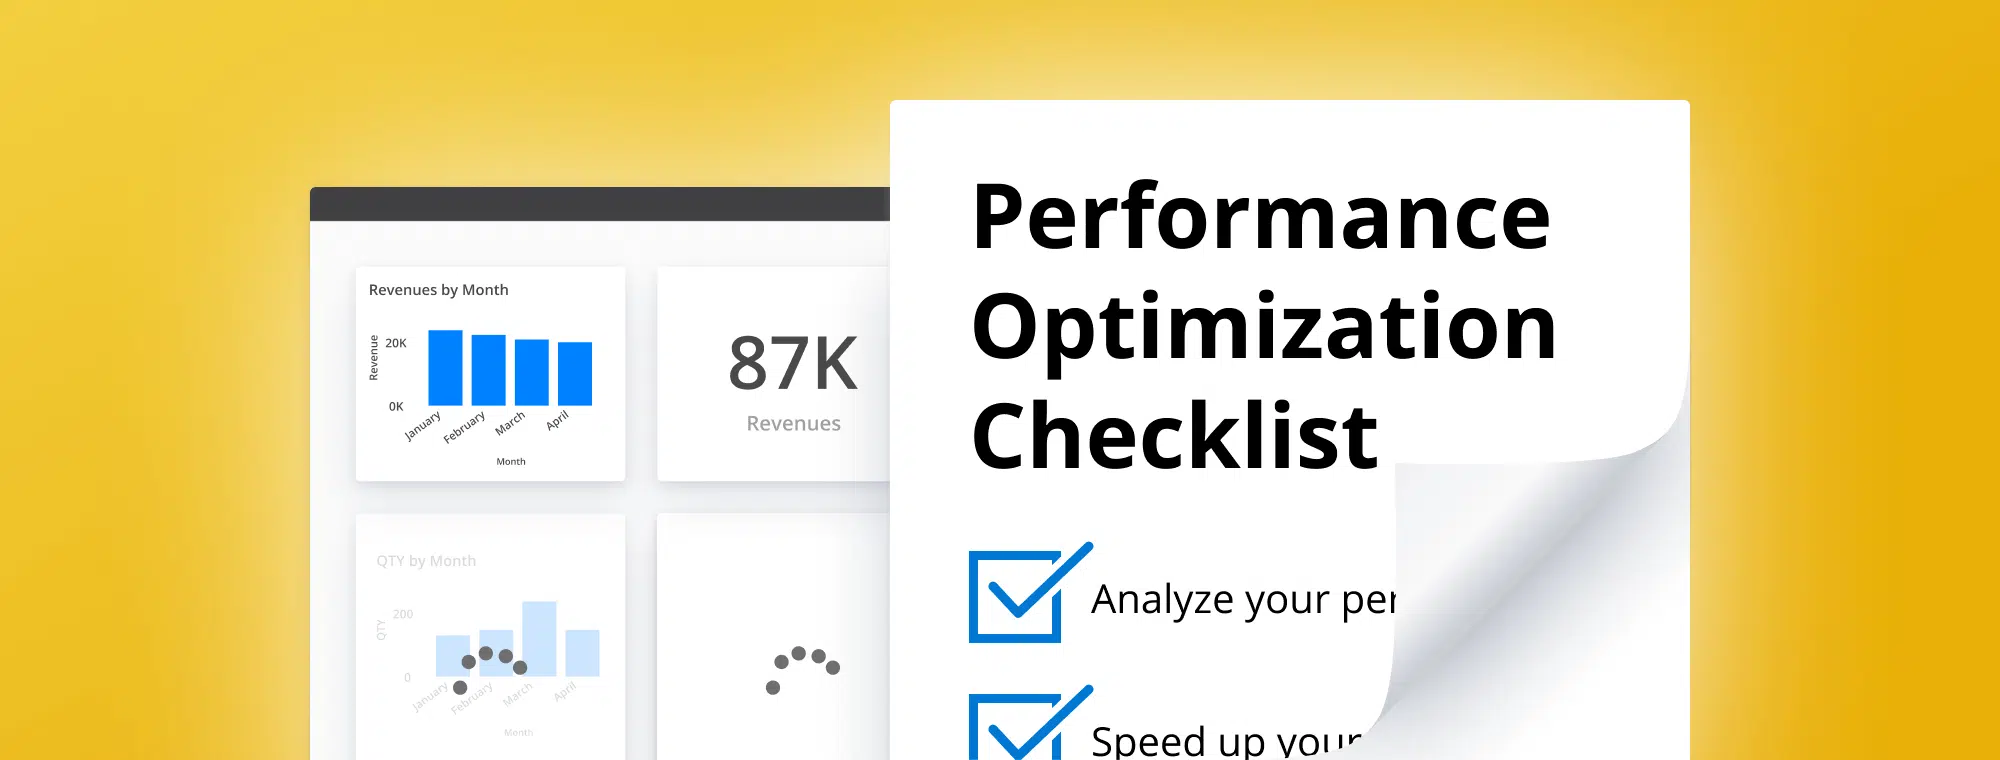 Featured-Image-PBI-Performance-Optimization-Checklist-2000x760